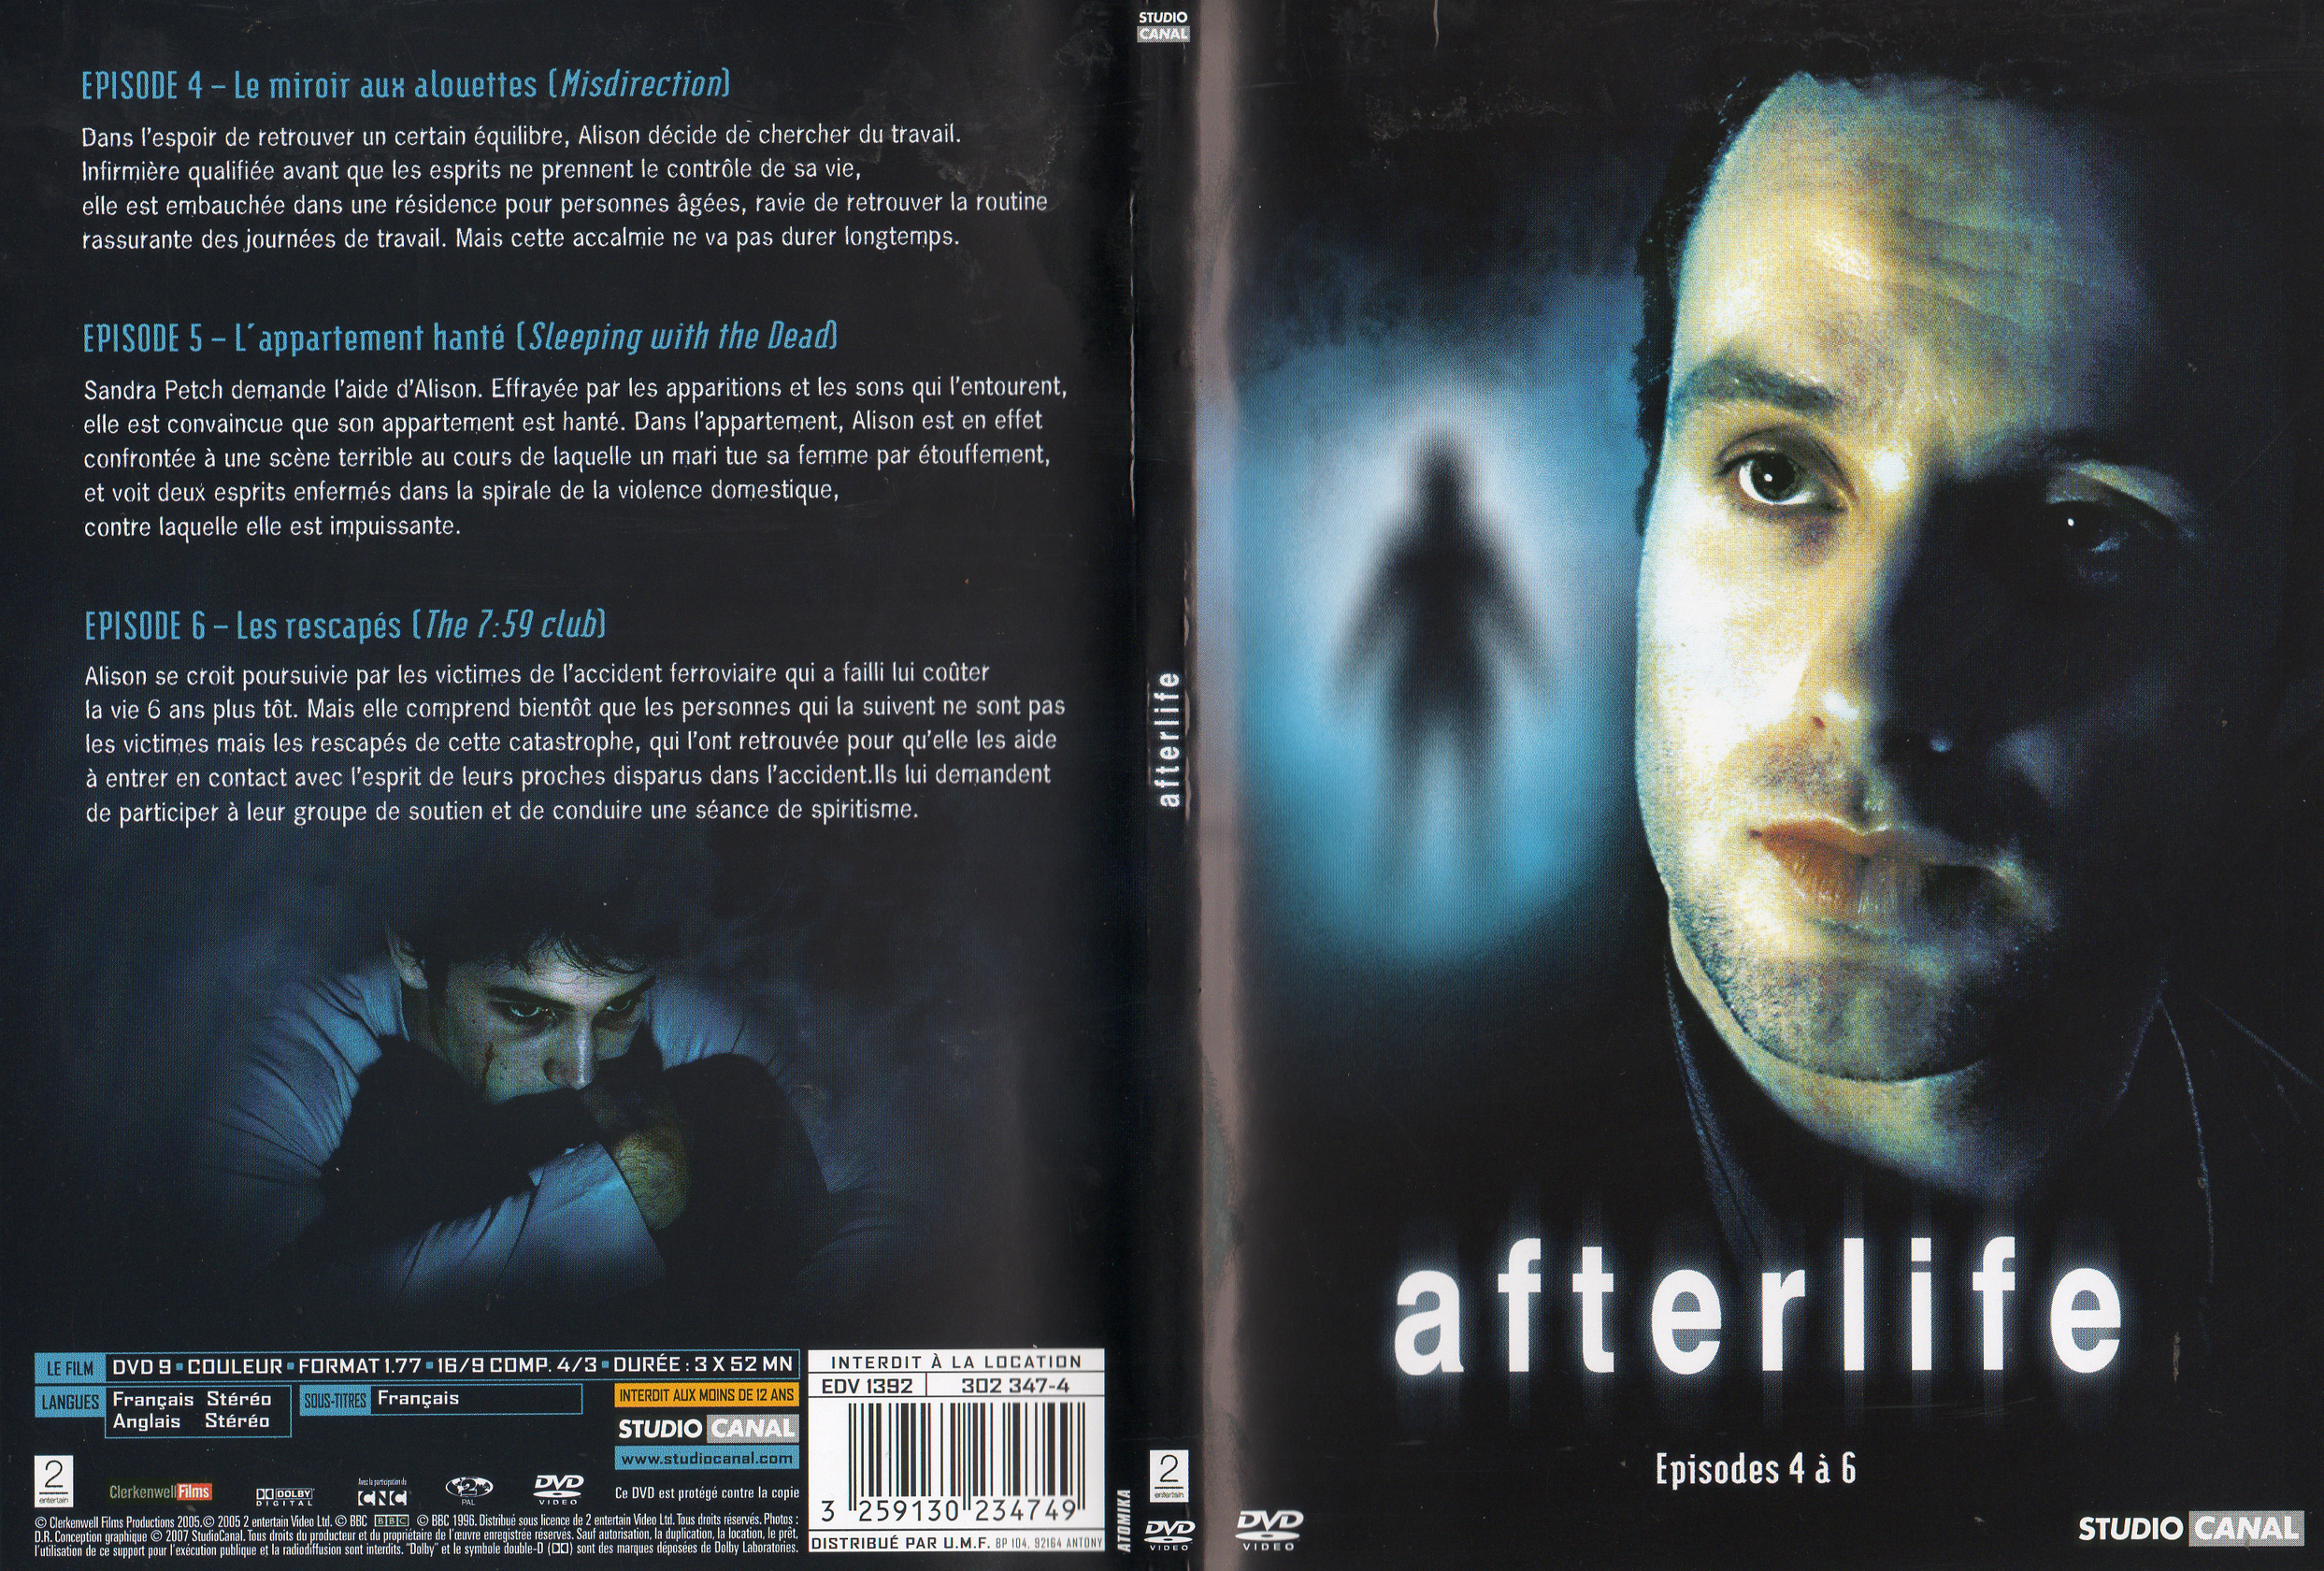 Jaquette DVD Afterlife Saison 1 DVD 2